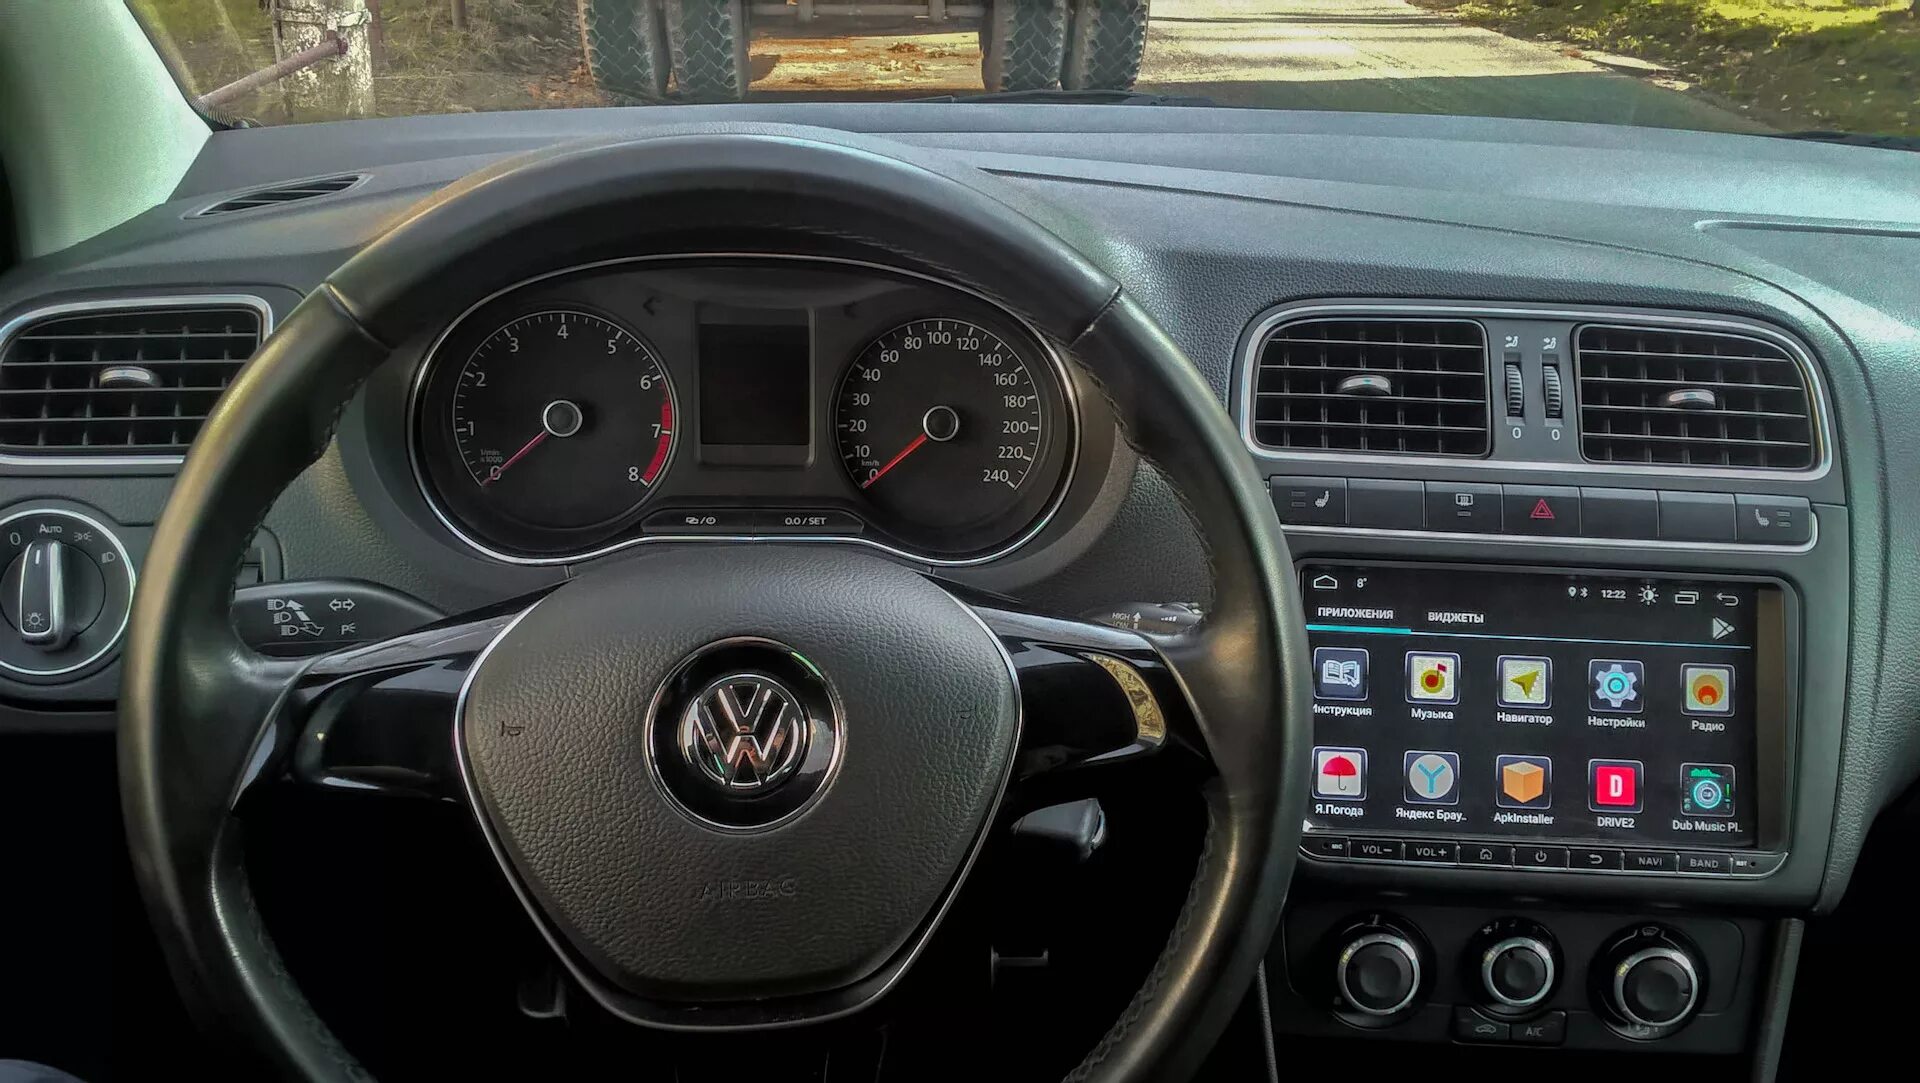 Торпеда фольксваген поло. Volkswagen Polo 2013 приборная панель. Панель приборов Фольксваген поло 2018. Панель приборов Volkswagen Polo 2018. Приборная панель Фольксваген поло седан 2012.